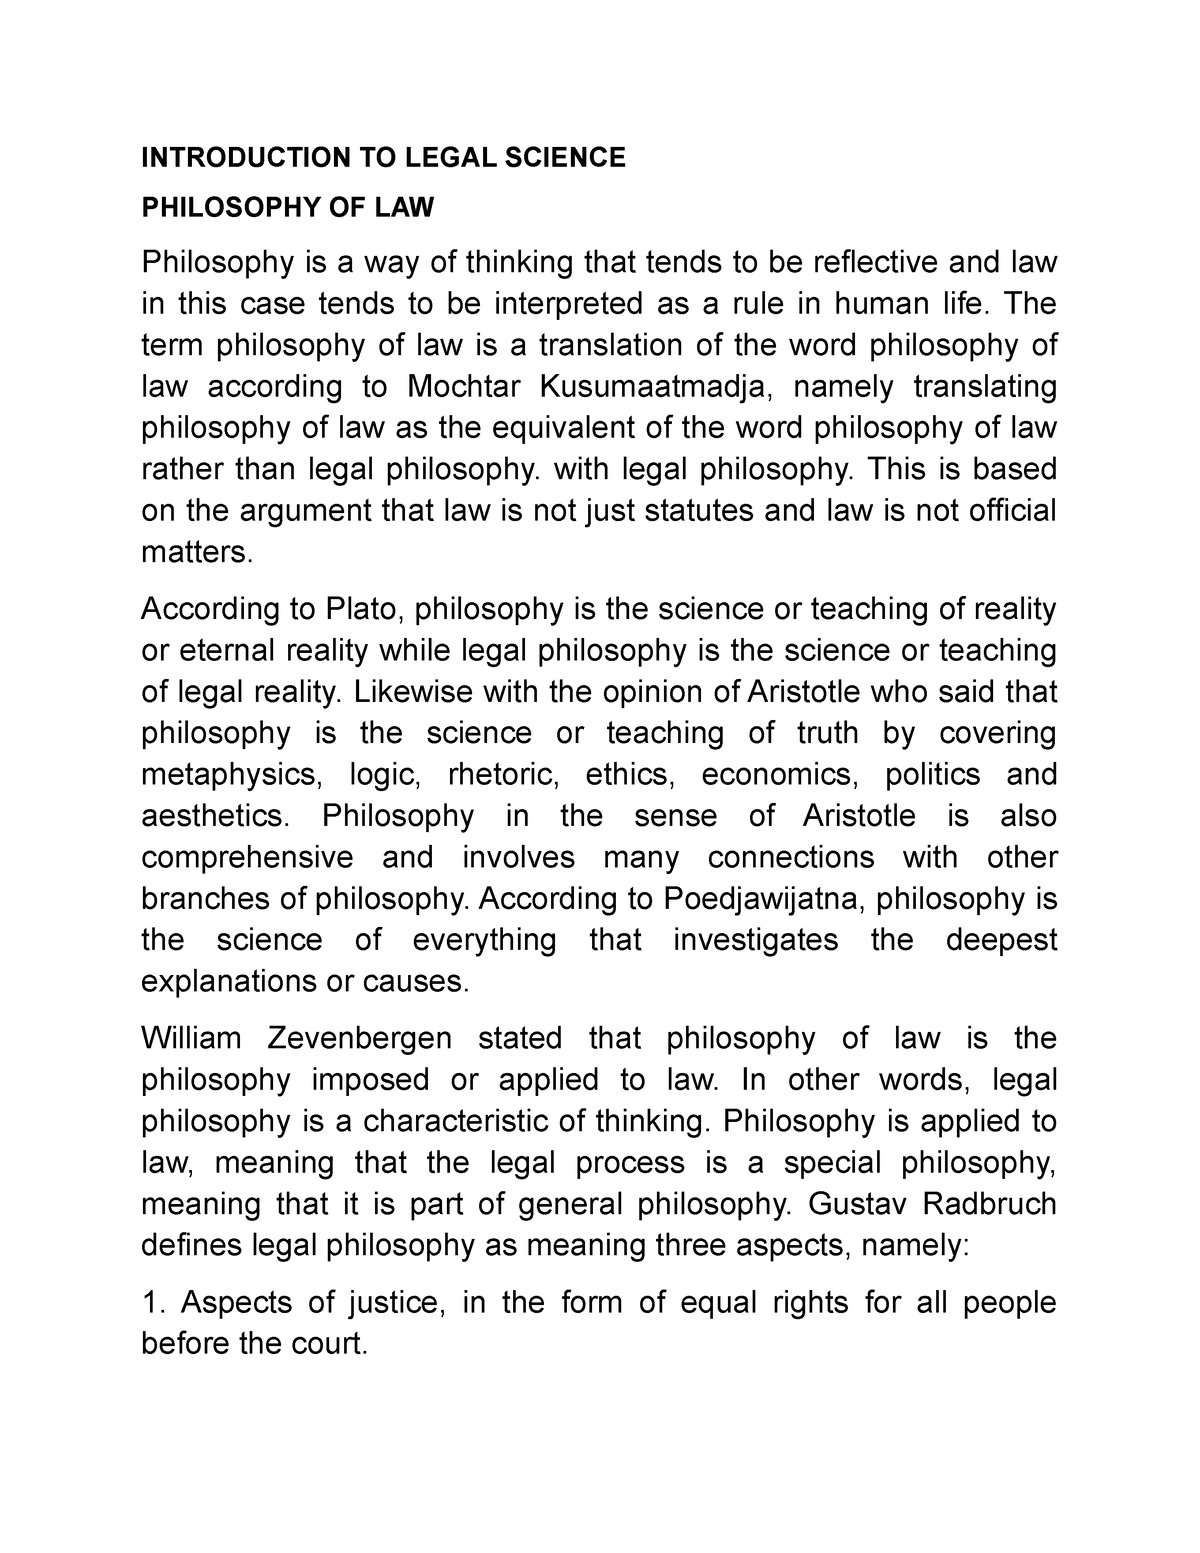 philosophy of law essay